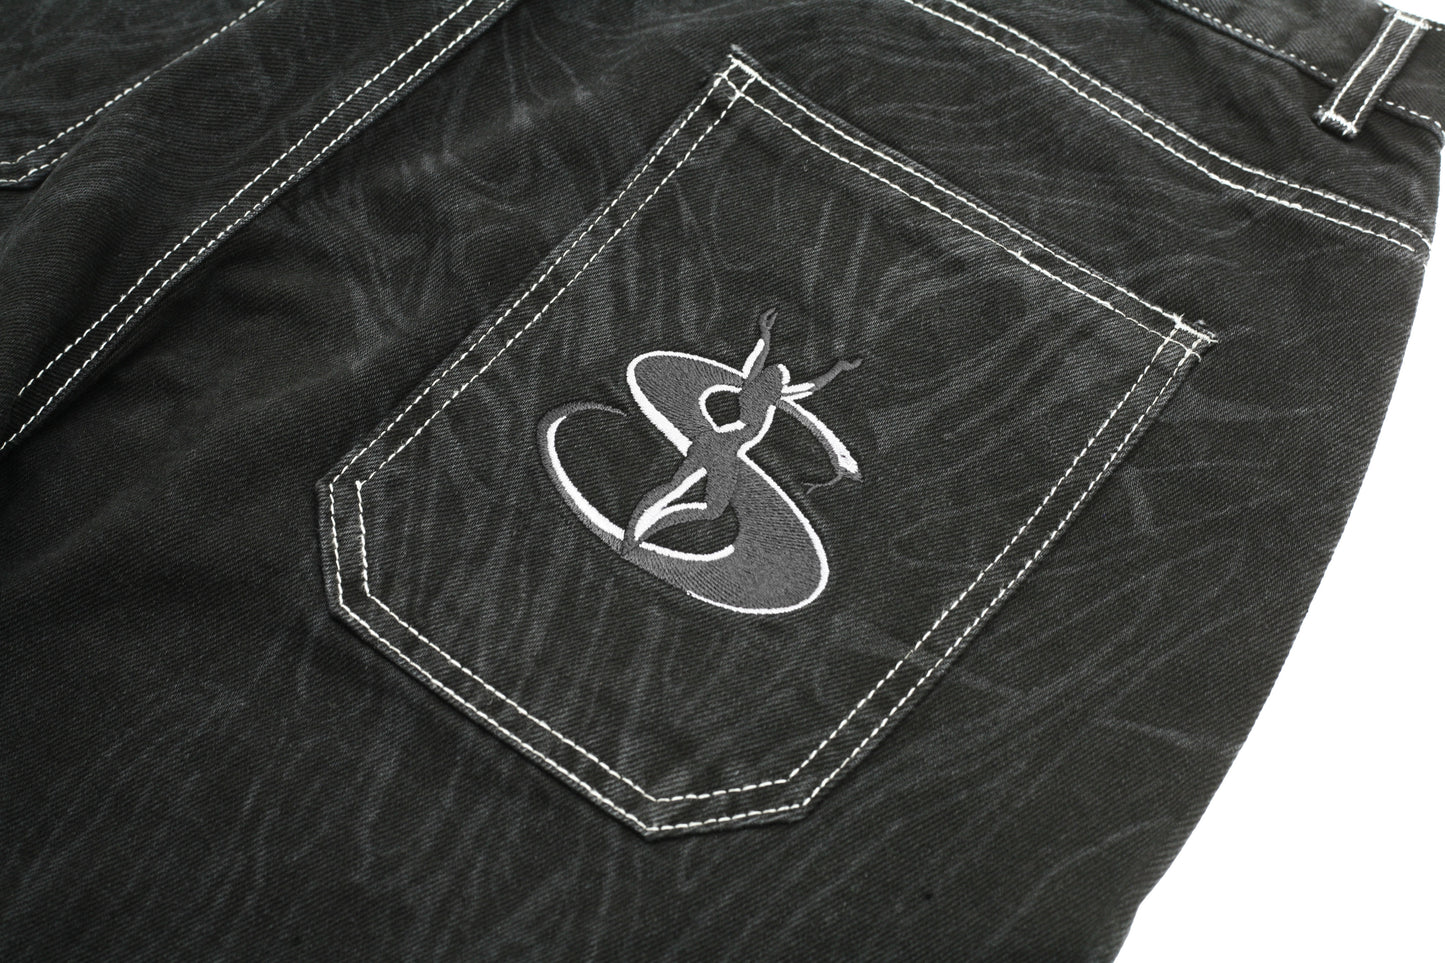 Ripper Jeans (Contrast Black)